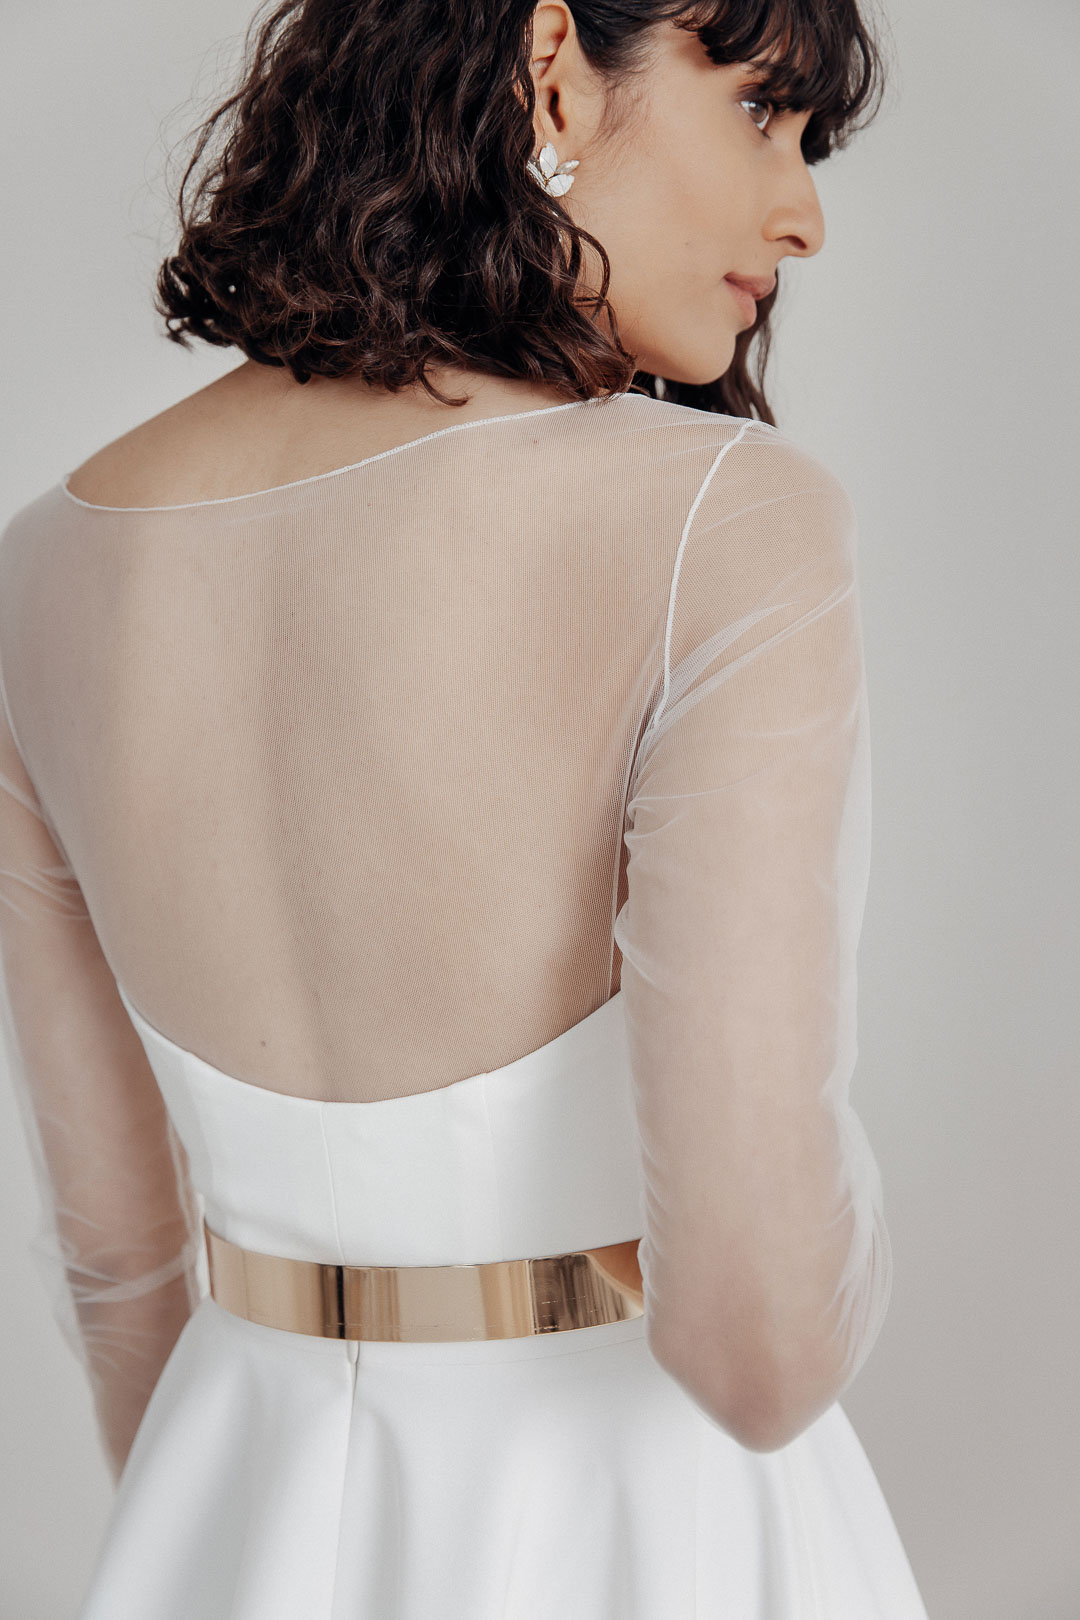 Alizia – Tülltop mit Mylou Braut Rock, brünettes Model mit goldenem Metallgürtel, Rückenaufnahme Detailbild